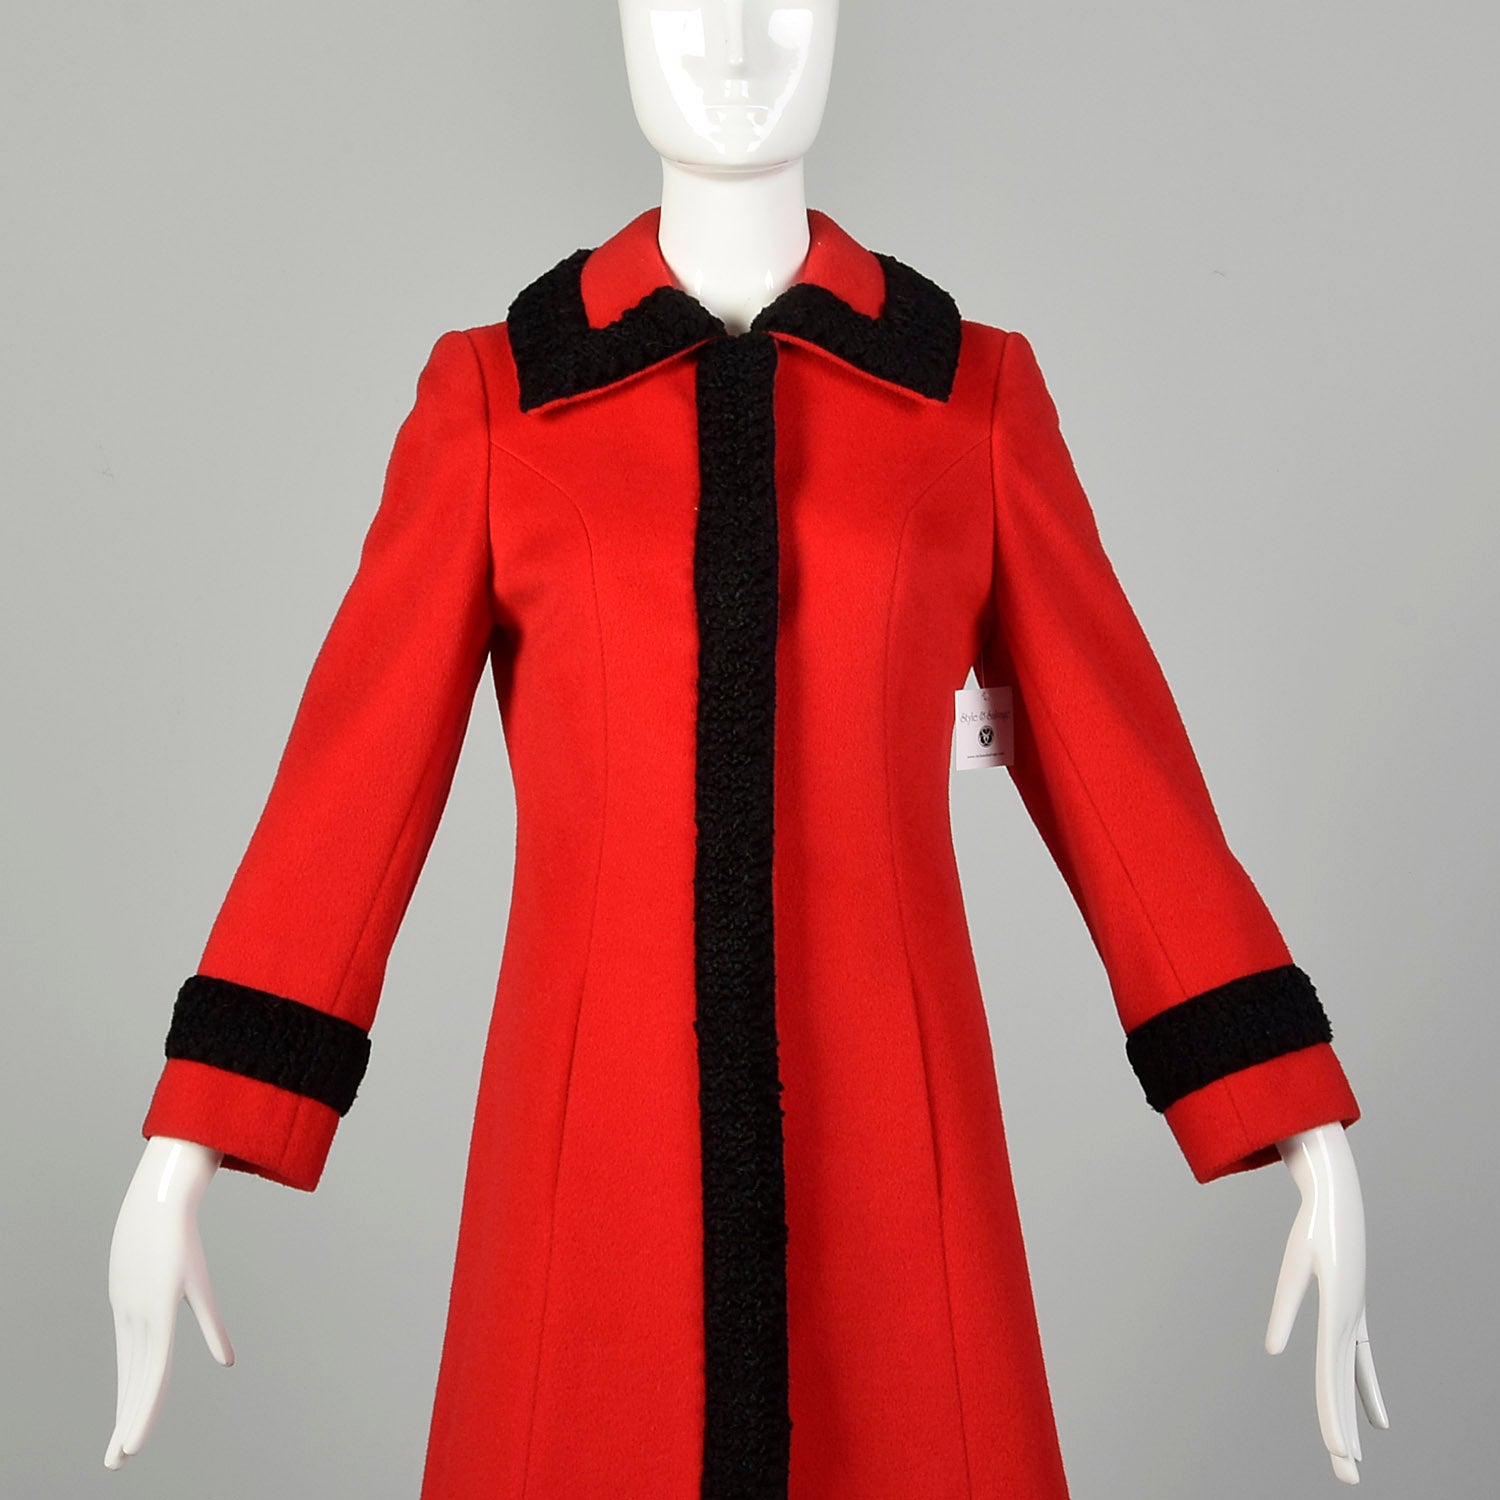 Small 1960s Coat Red Mod Russian Princess Faux Persian Lamb Fur Winter Holiday